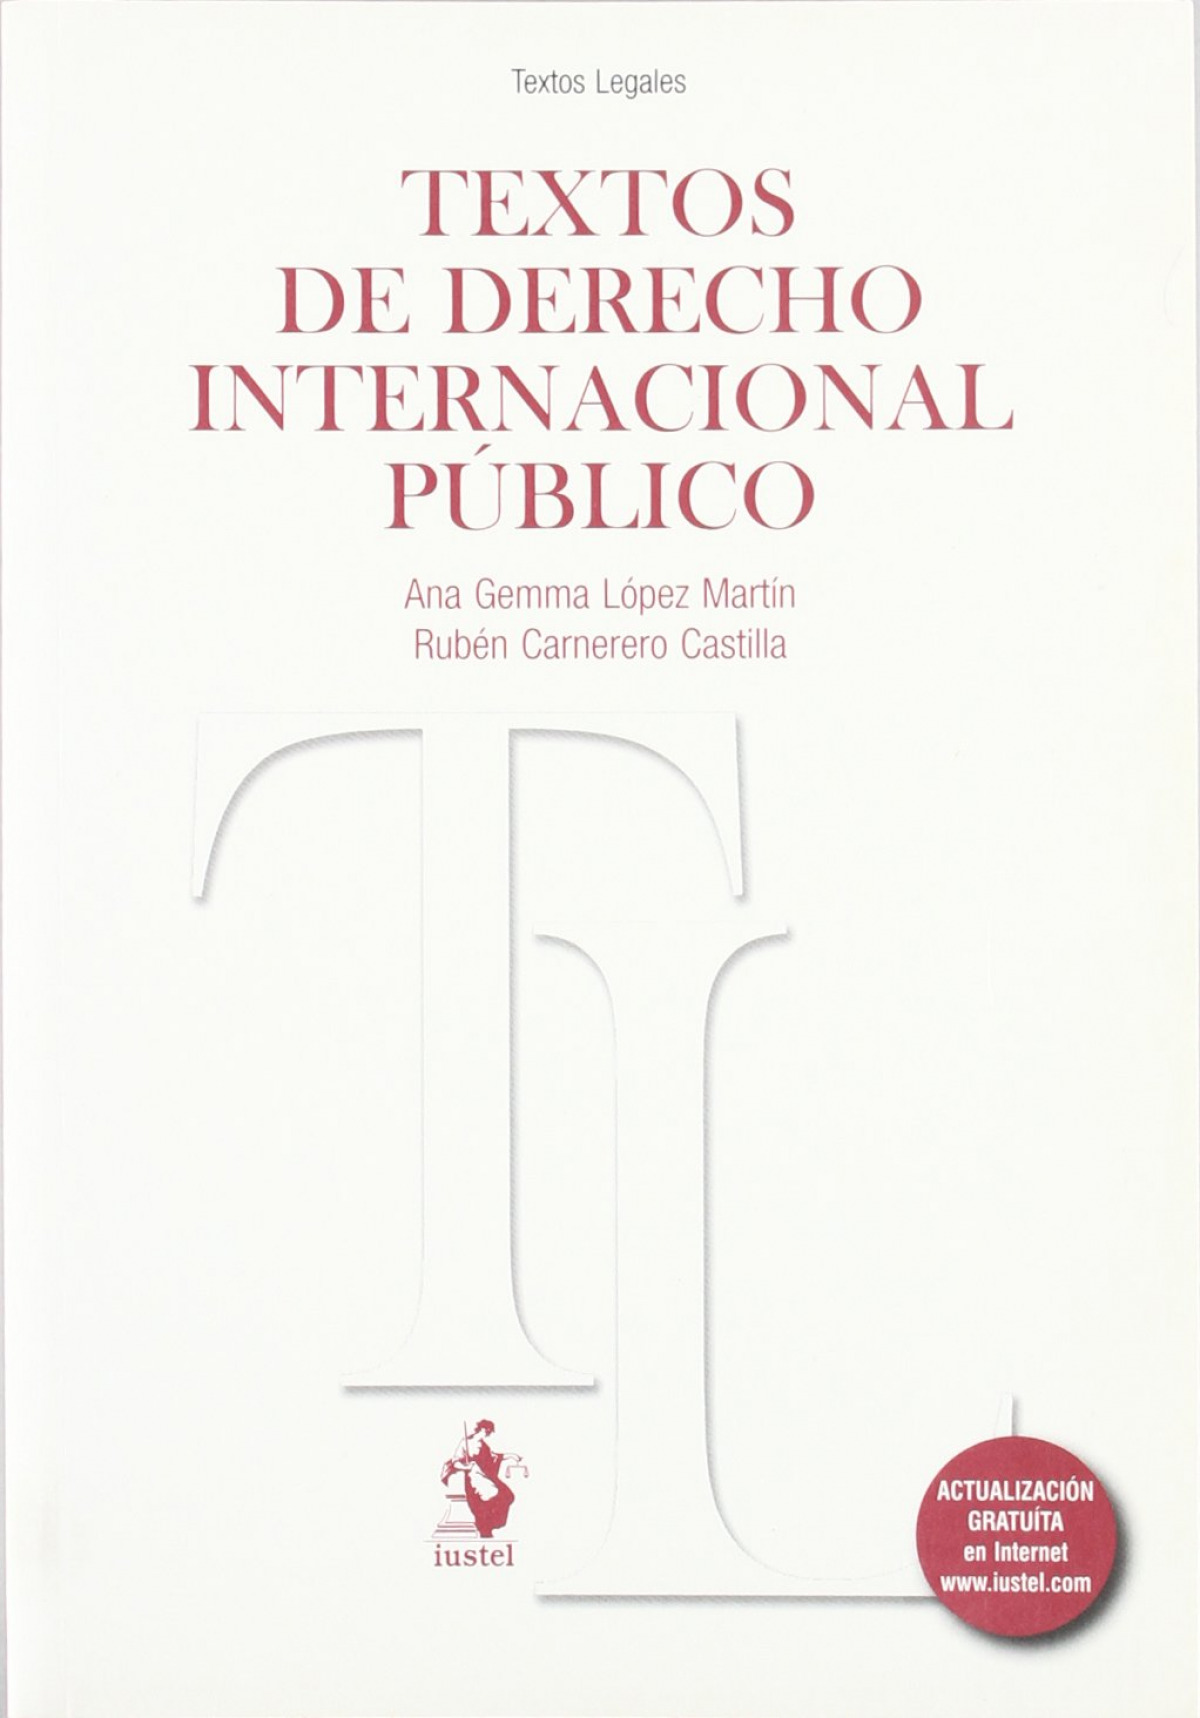 Textos derecho inter publico - Lopez, Ana